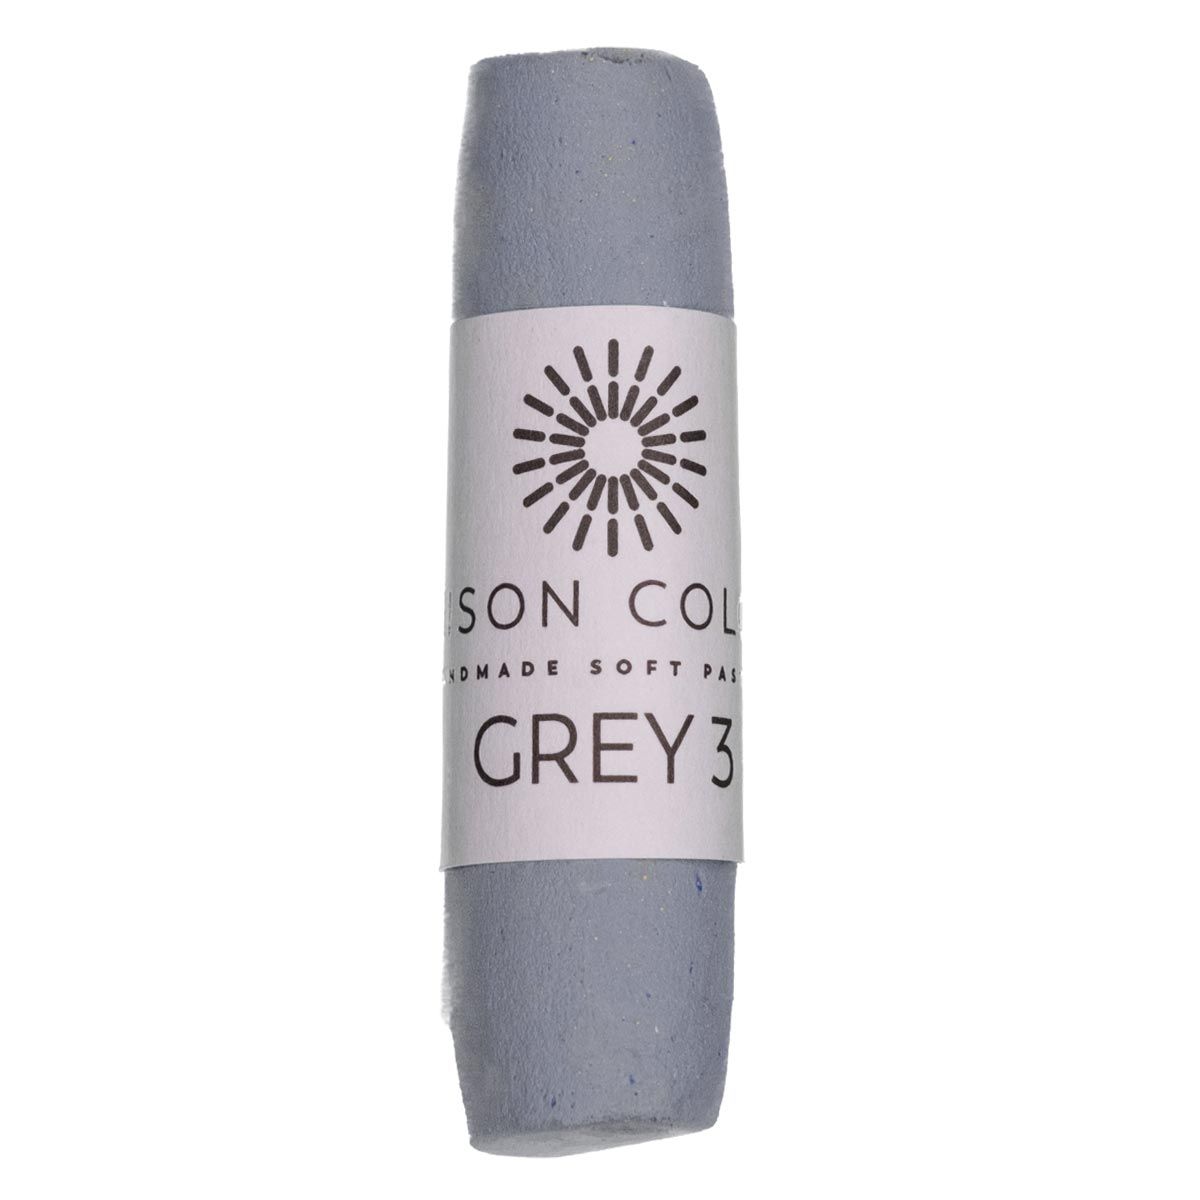 Unison Pastel - Grey 3